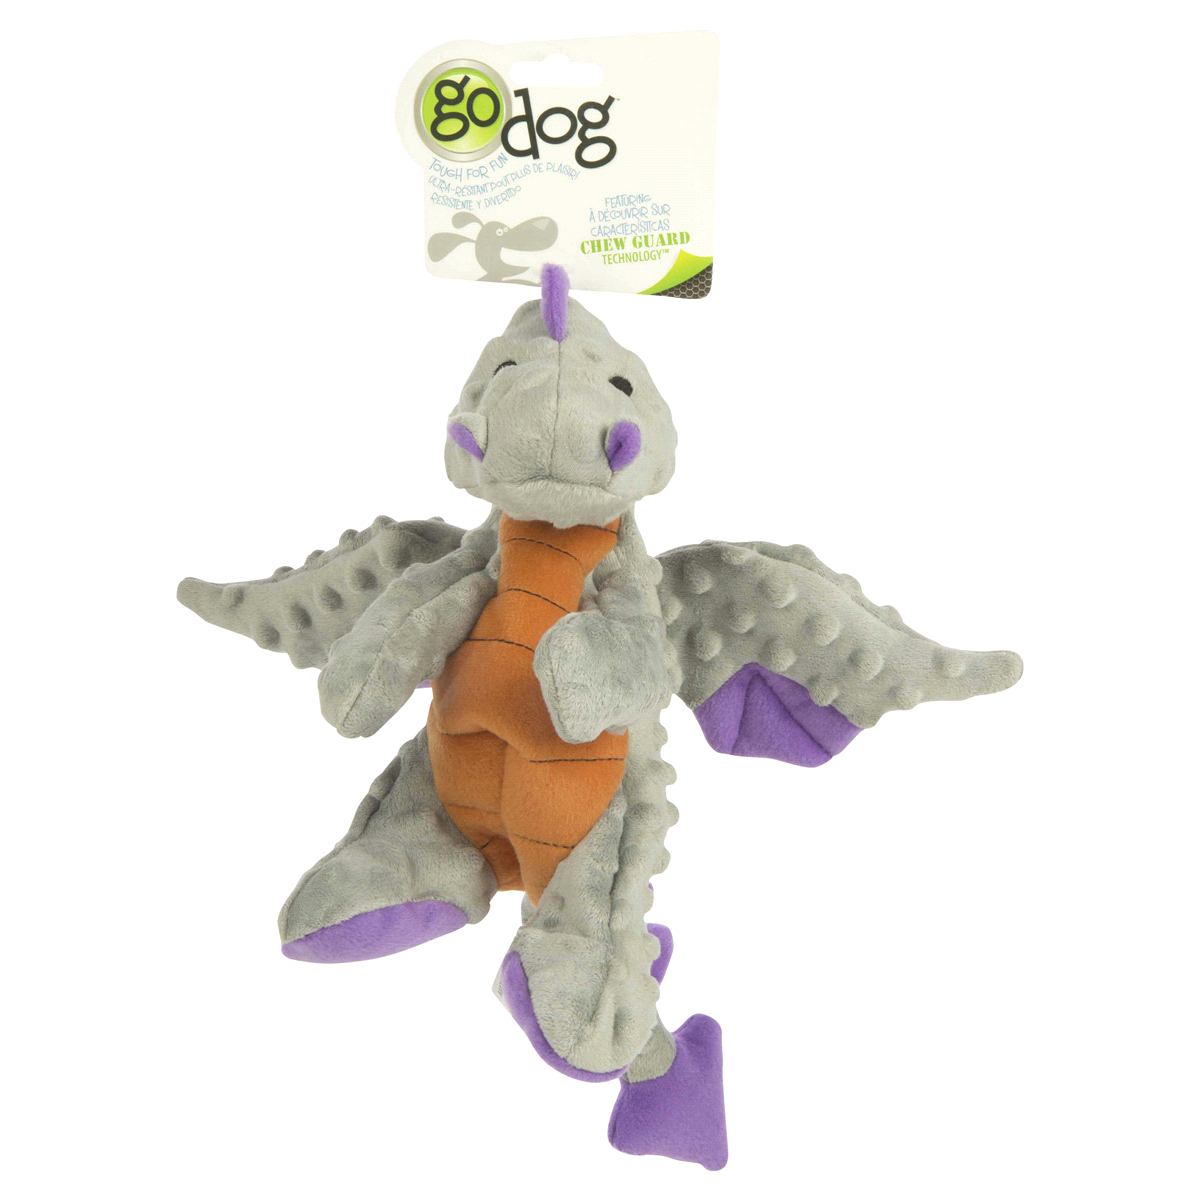 goDog Dragon Durable Squeaky Plush Dog Toy, Grey